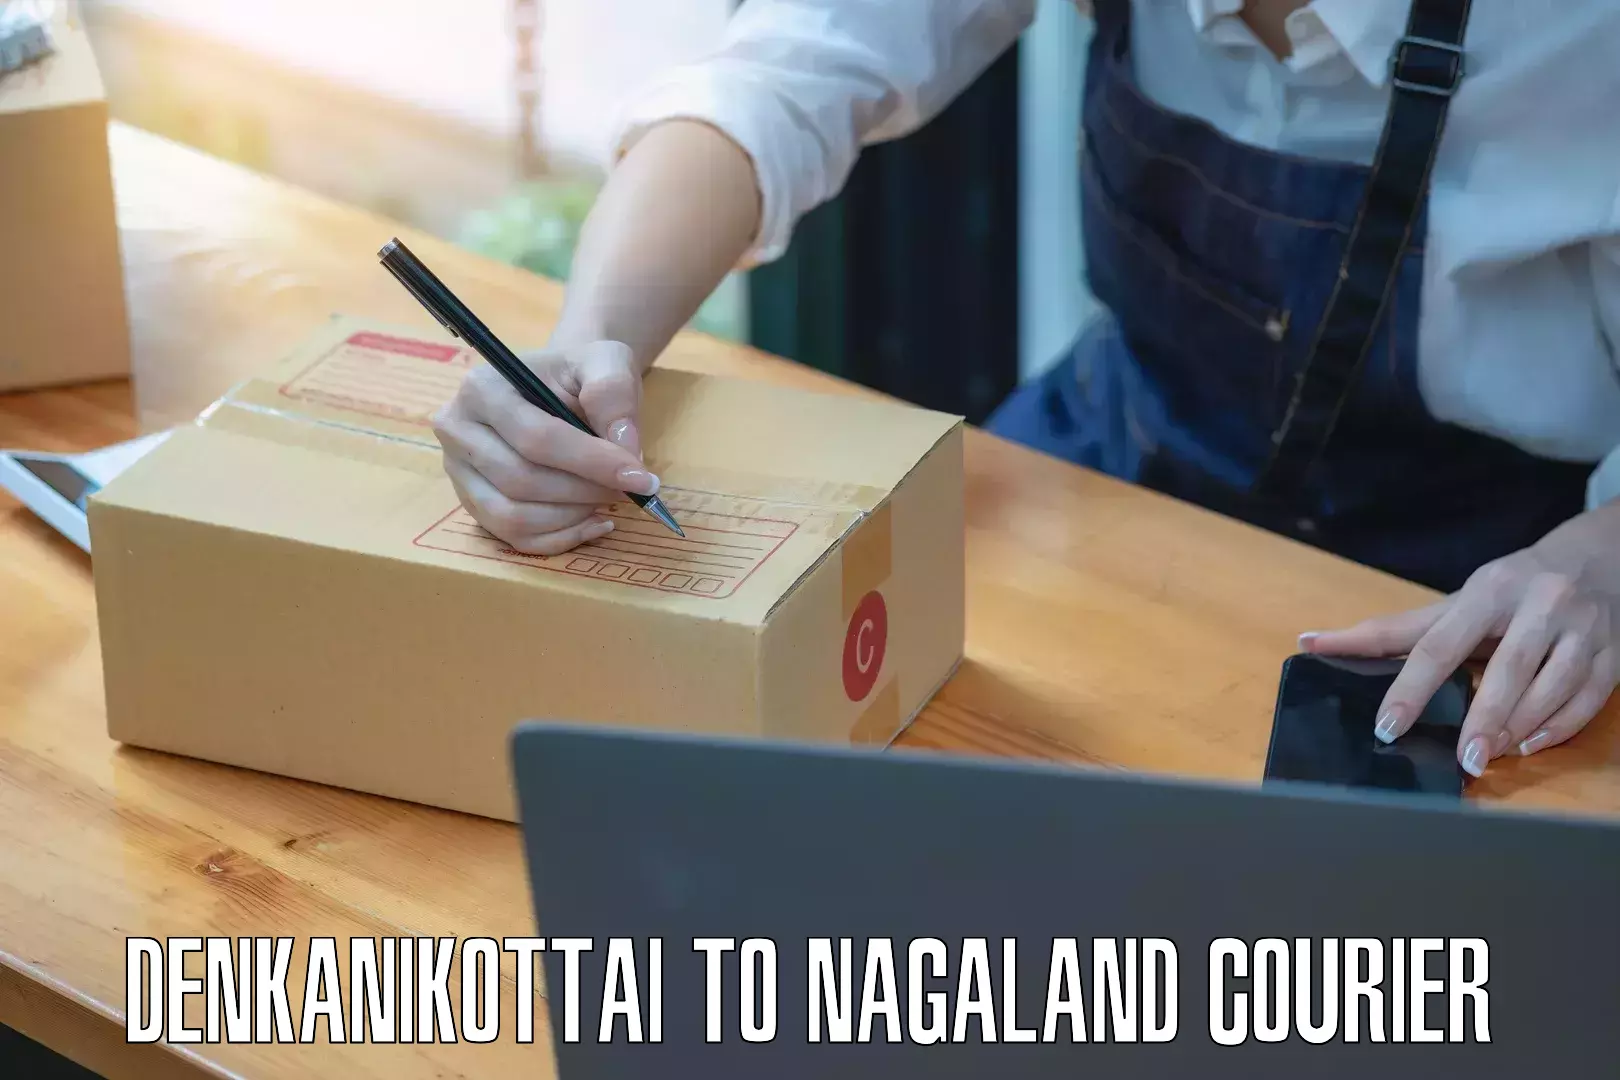 Digital courier platforms Denkanikottai to NIT Nagaland